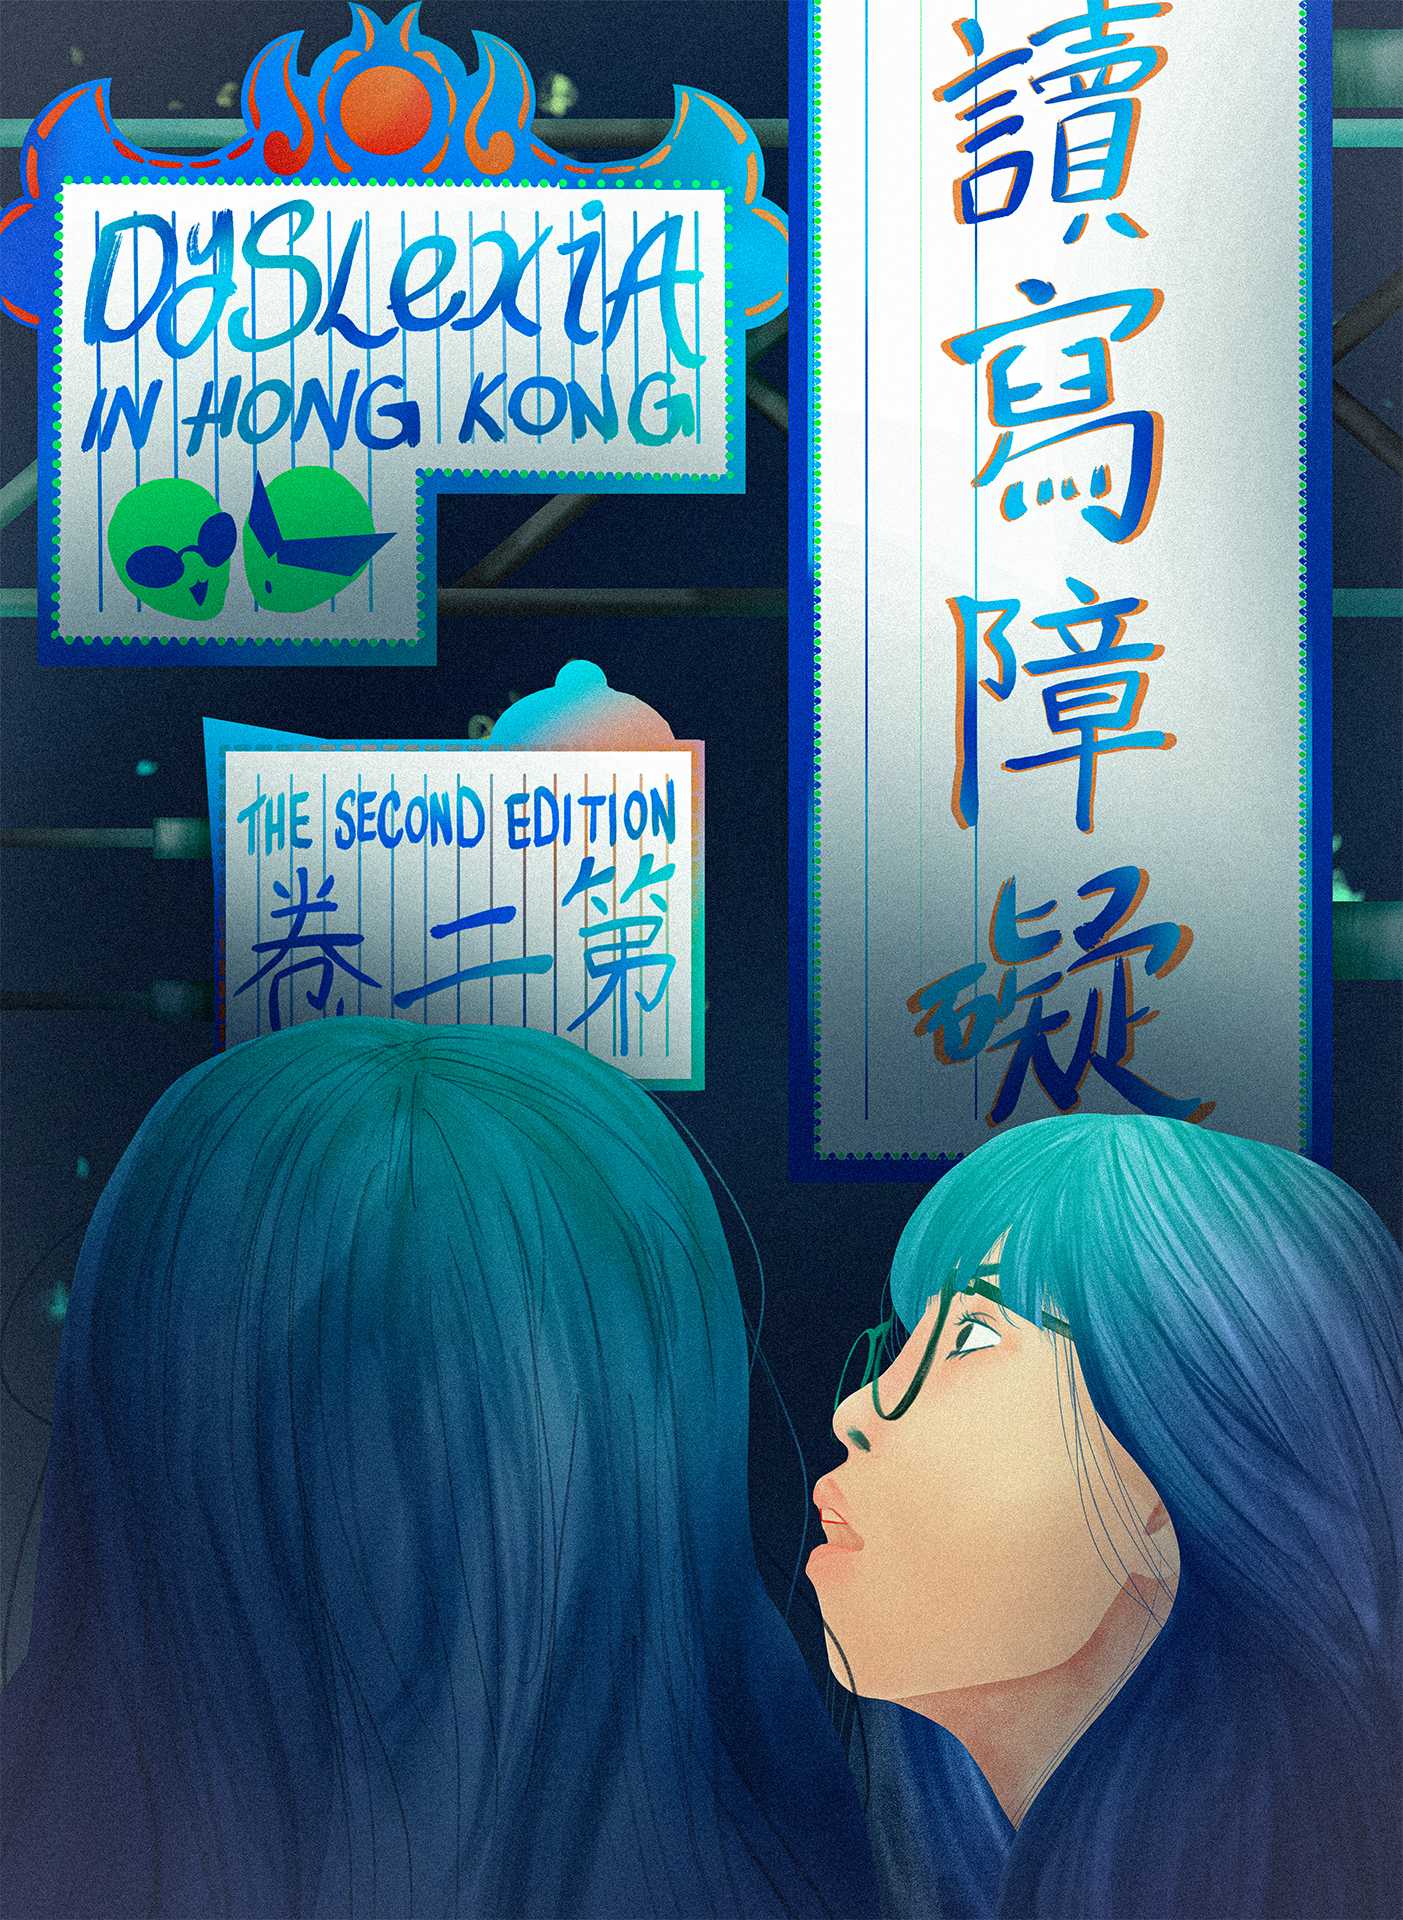 Dyslexia in Hong Kong - Poster 2 